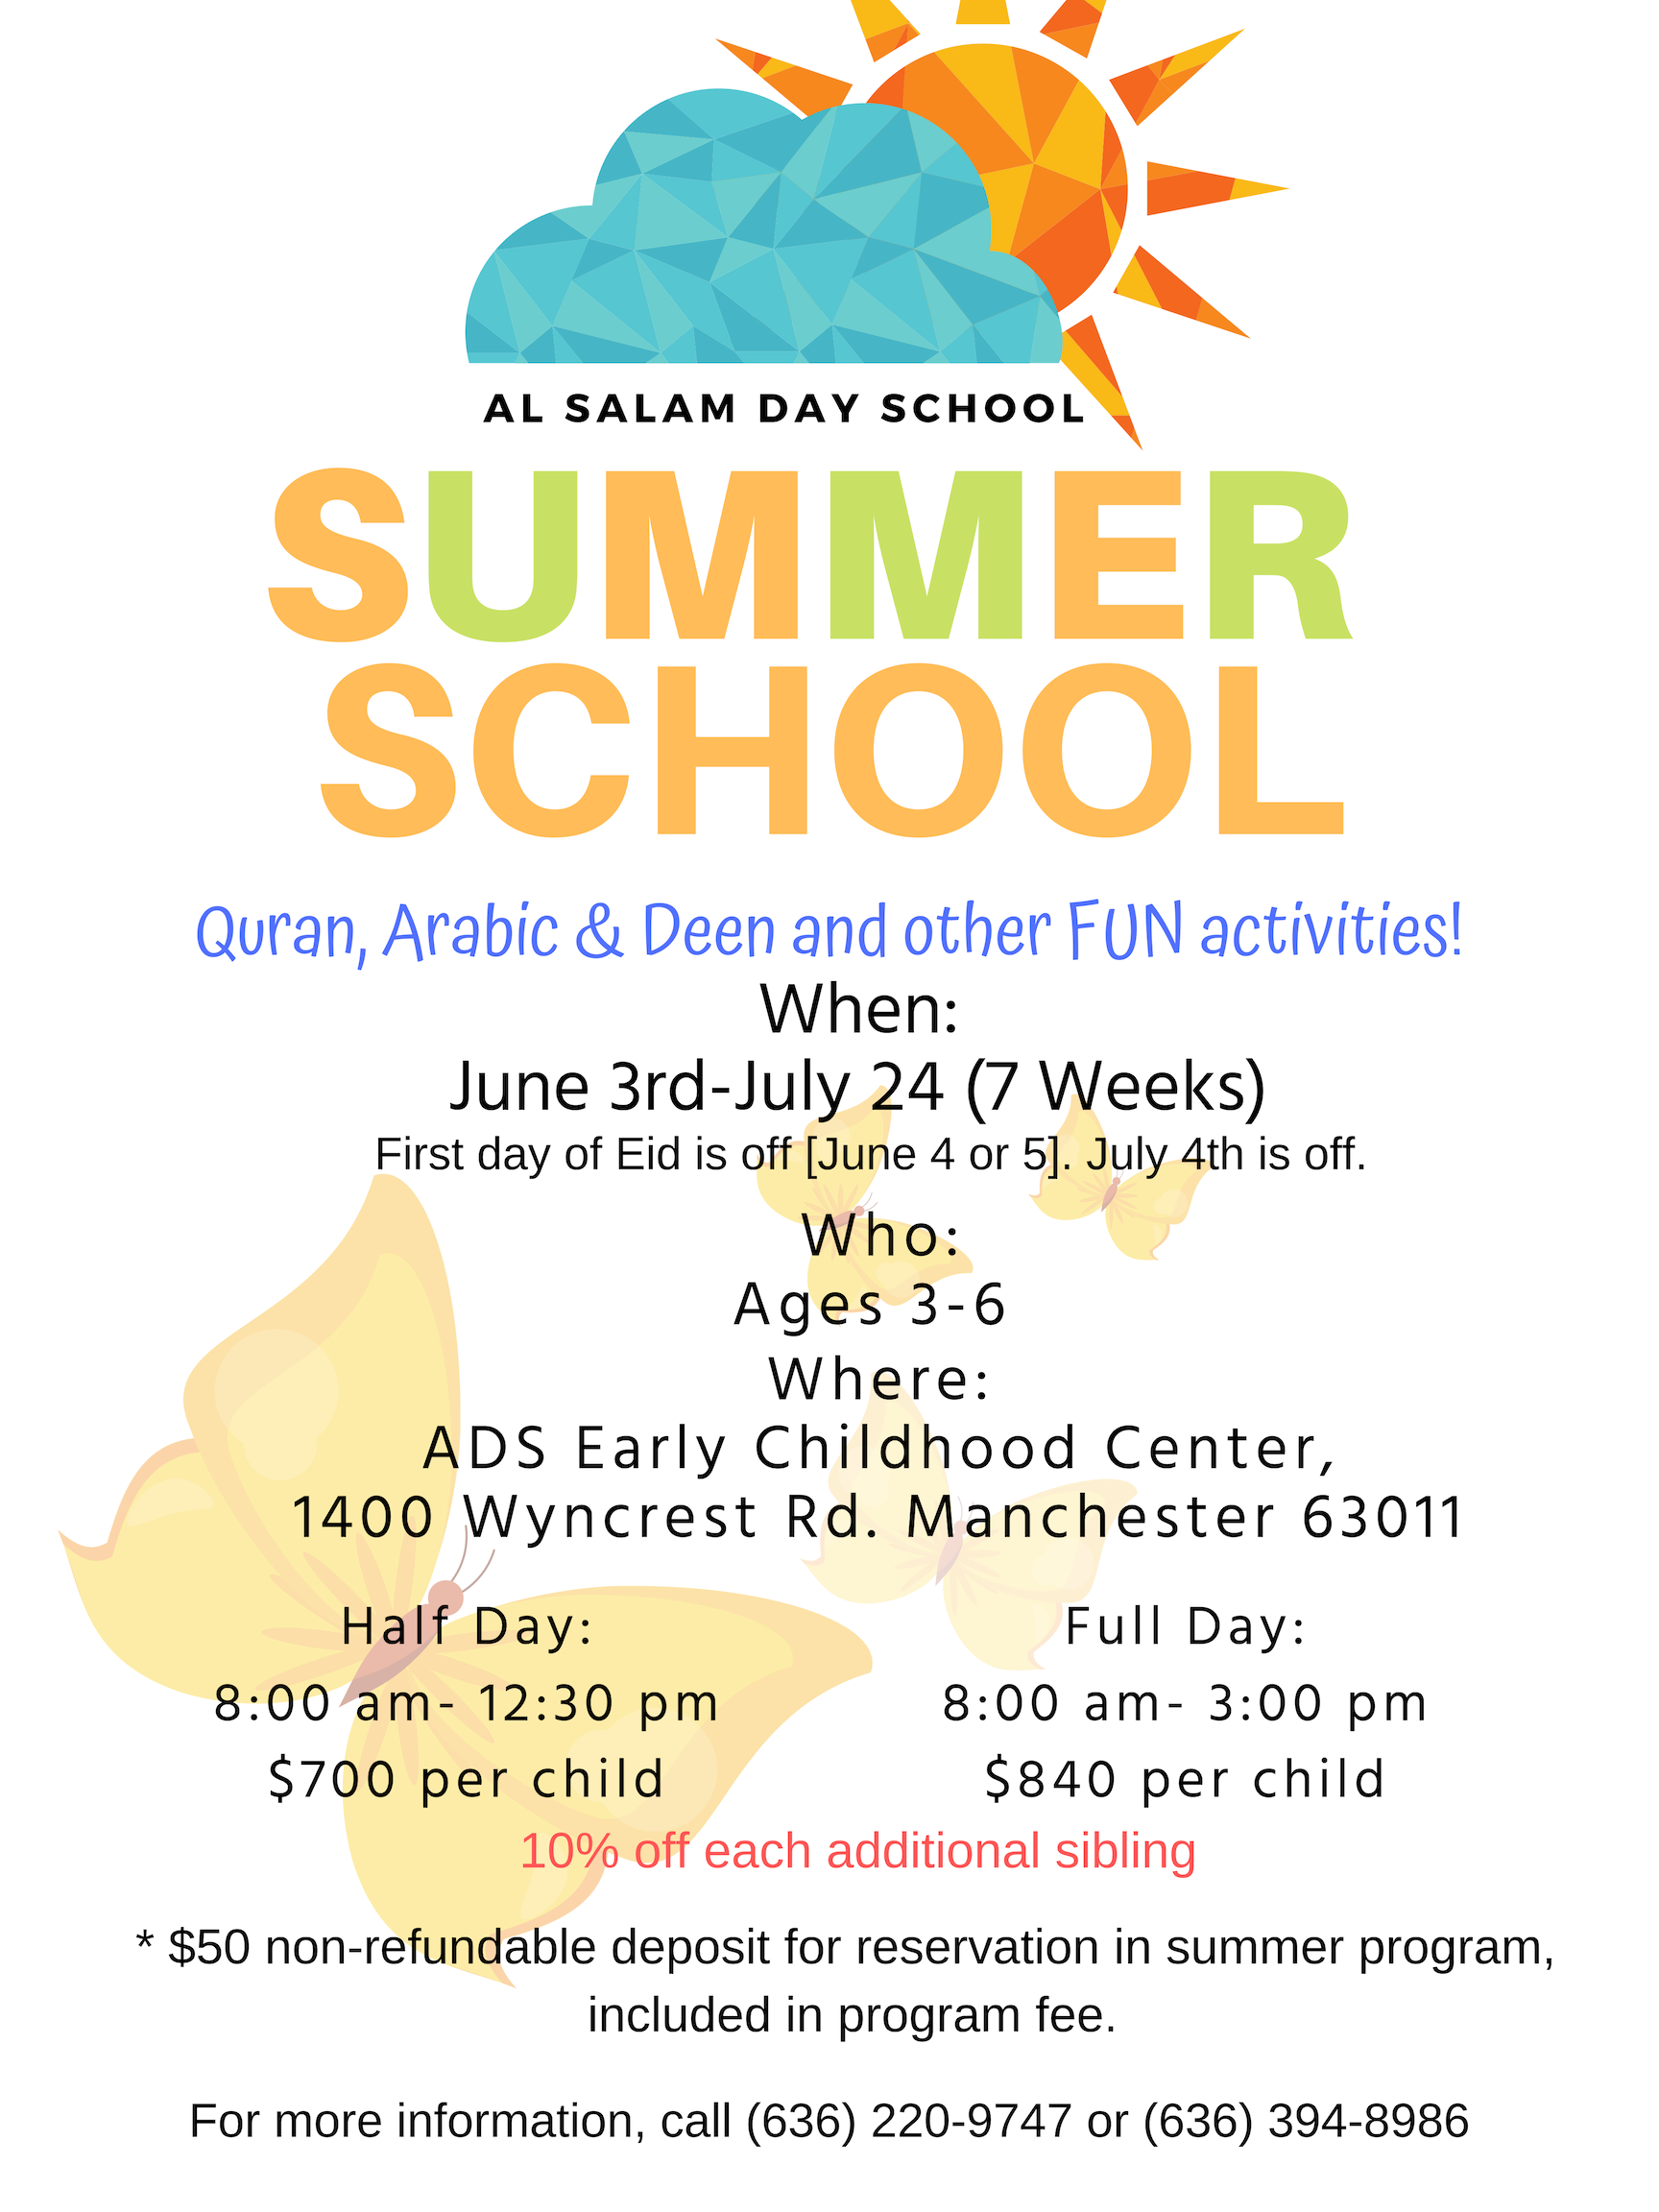 Summer Programs - Al Salam Day School